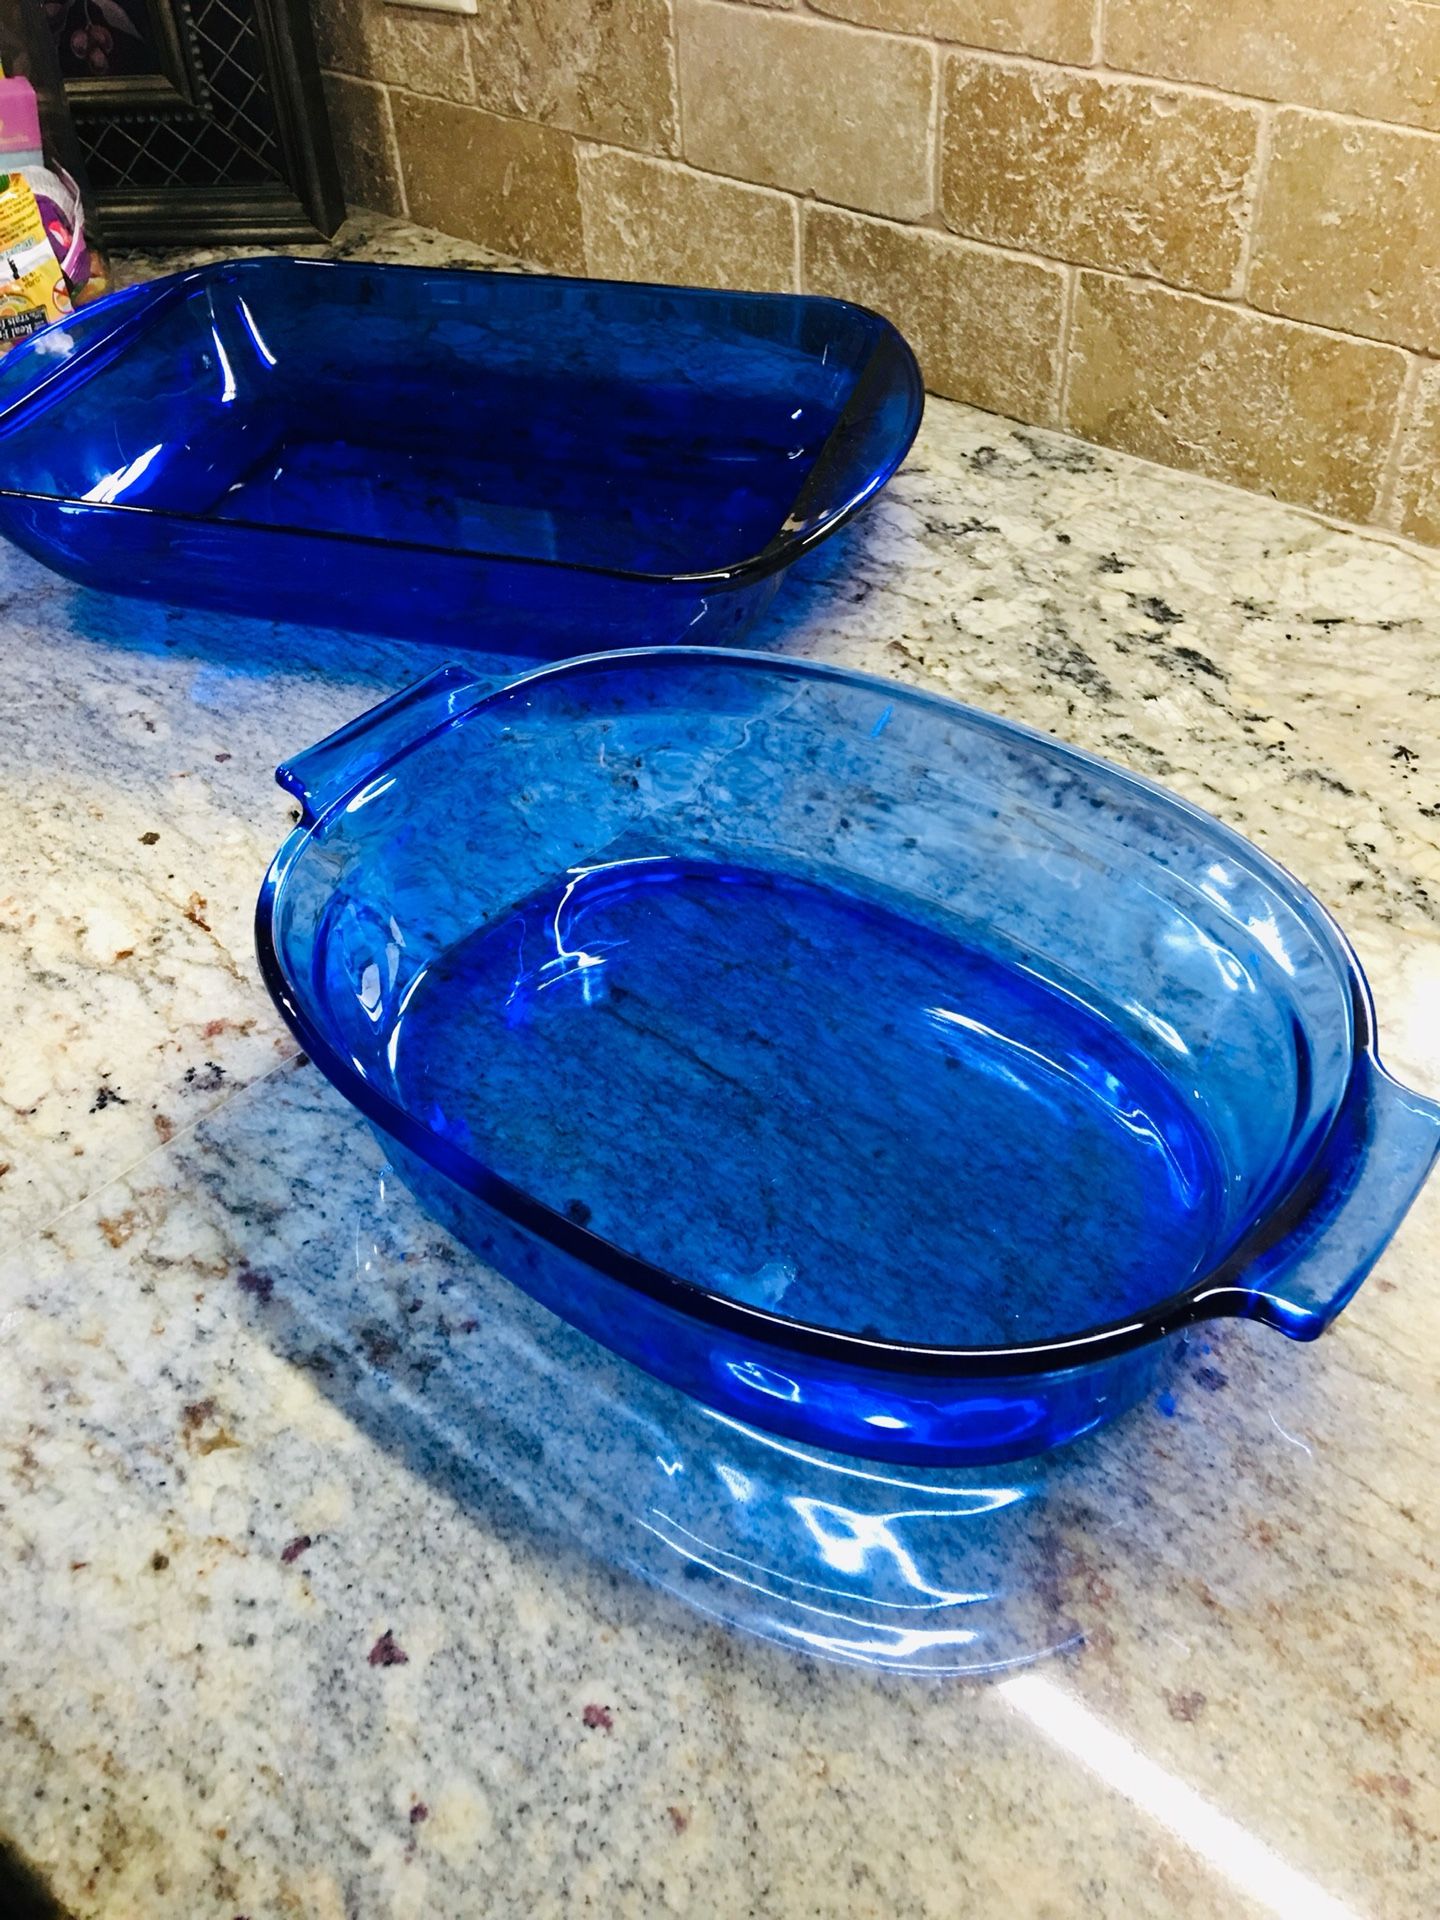 Cobalt blue glass baking dishes